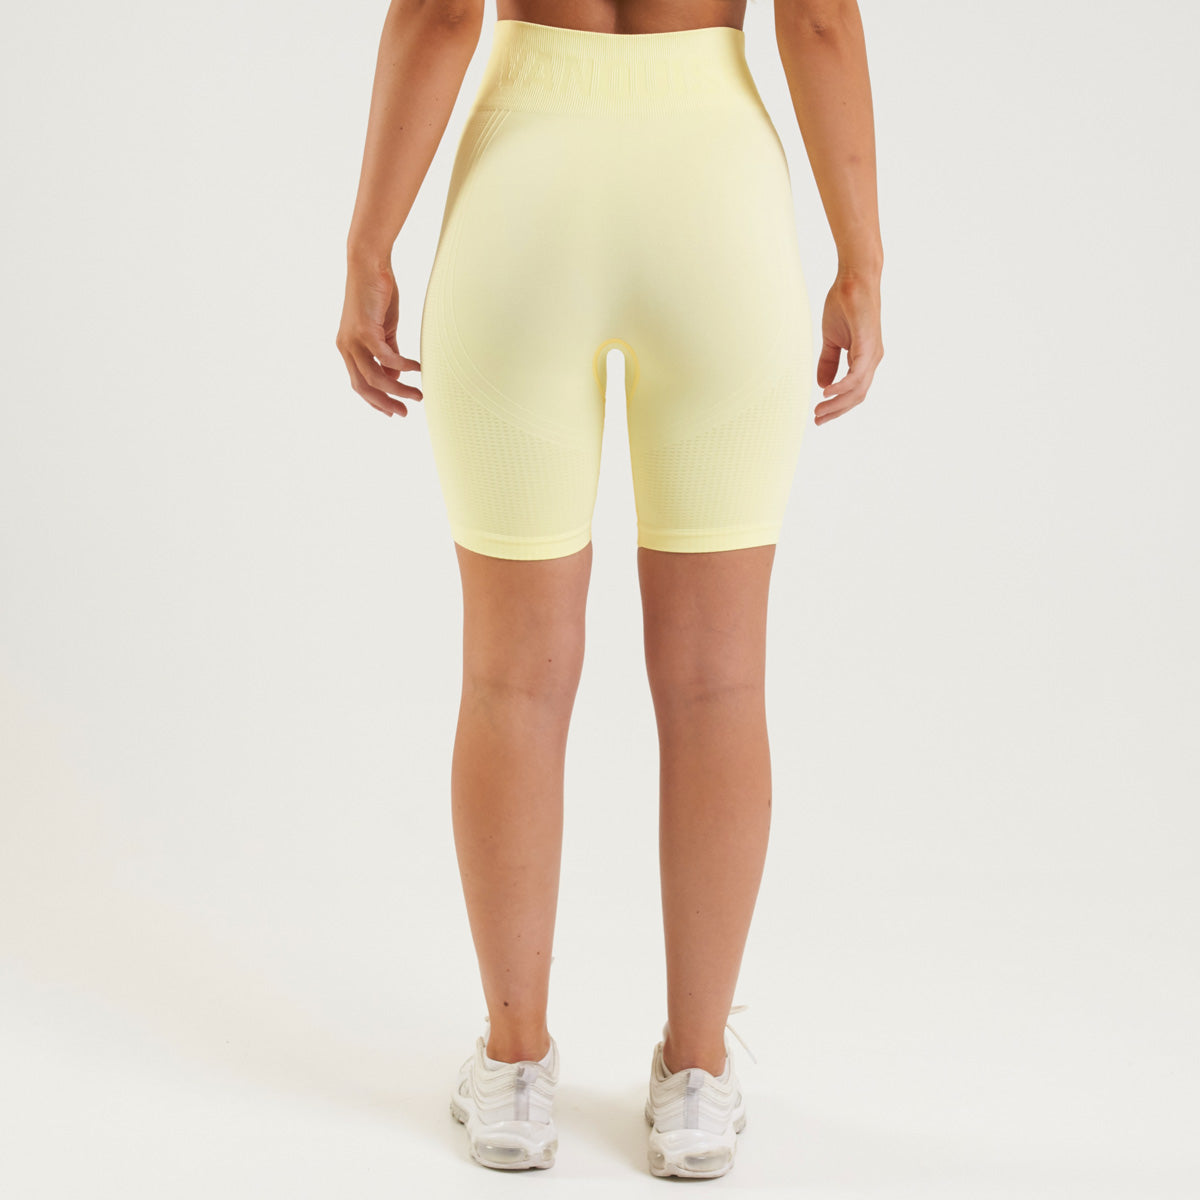 lemon cycling shorts